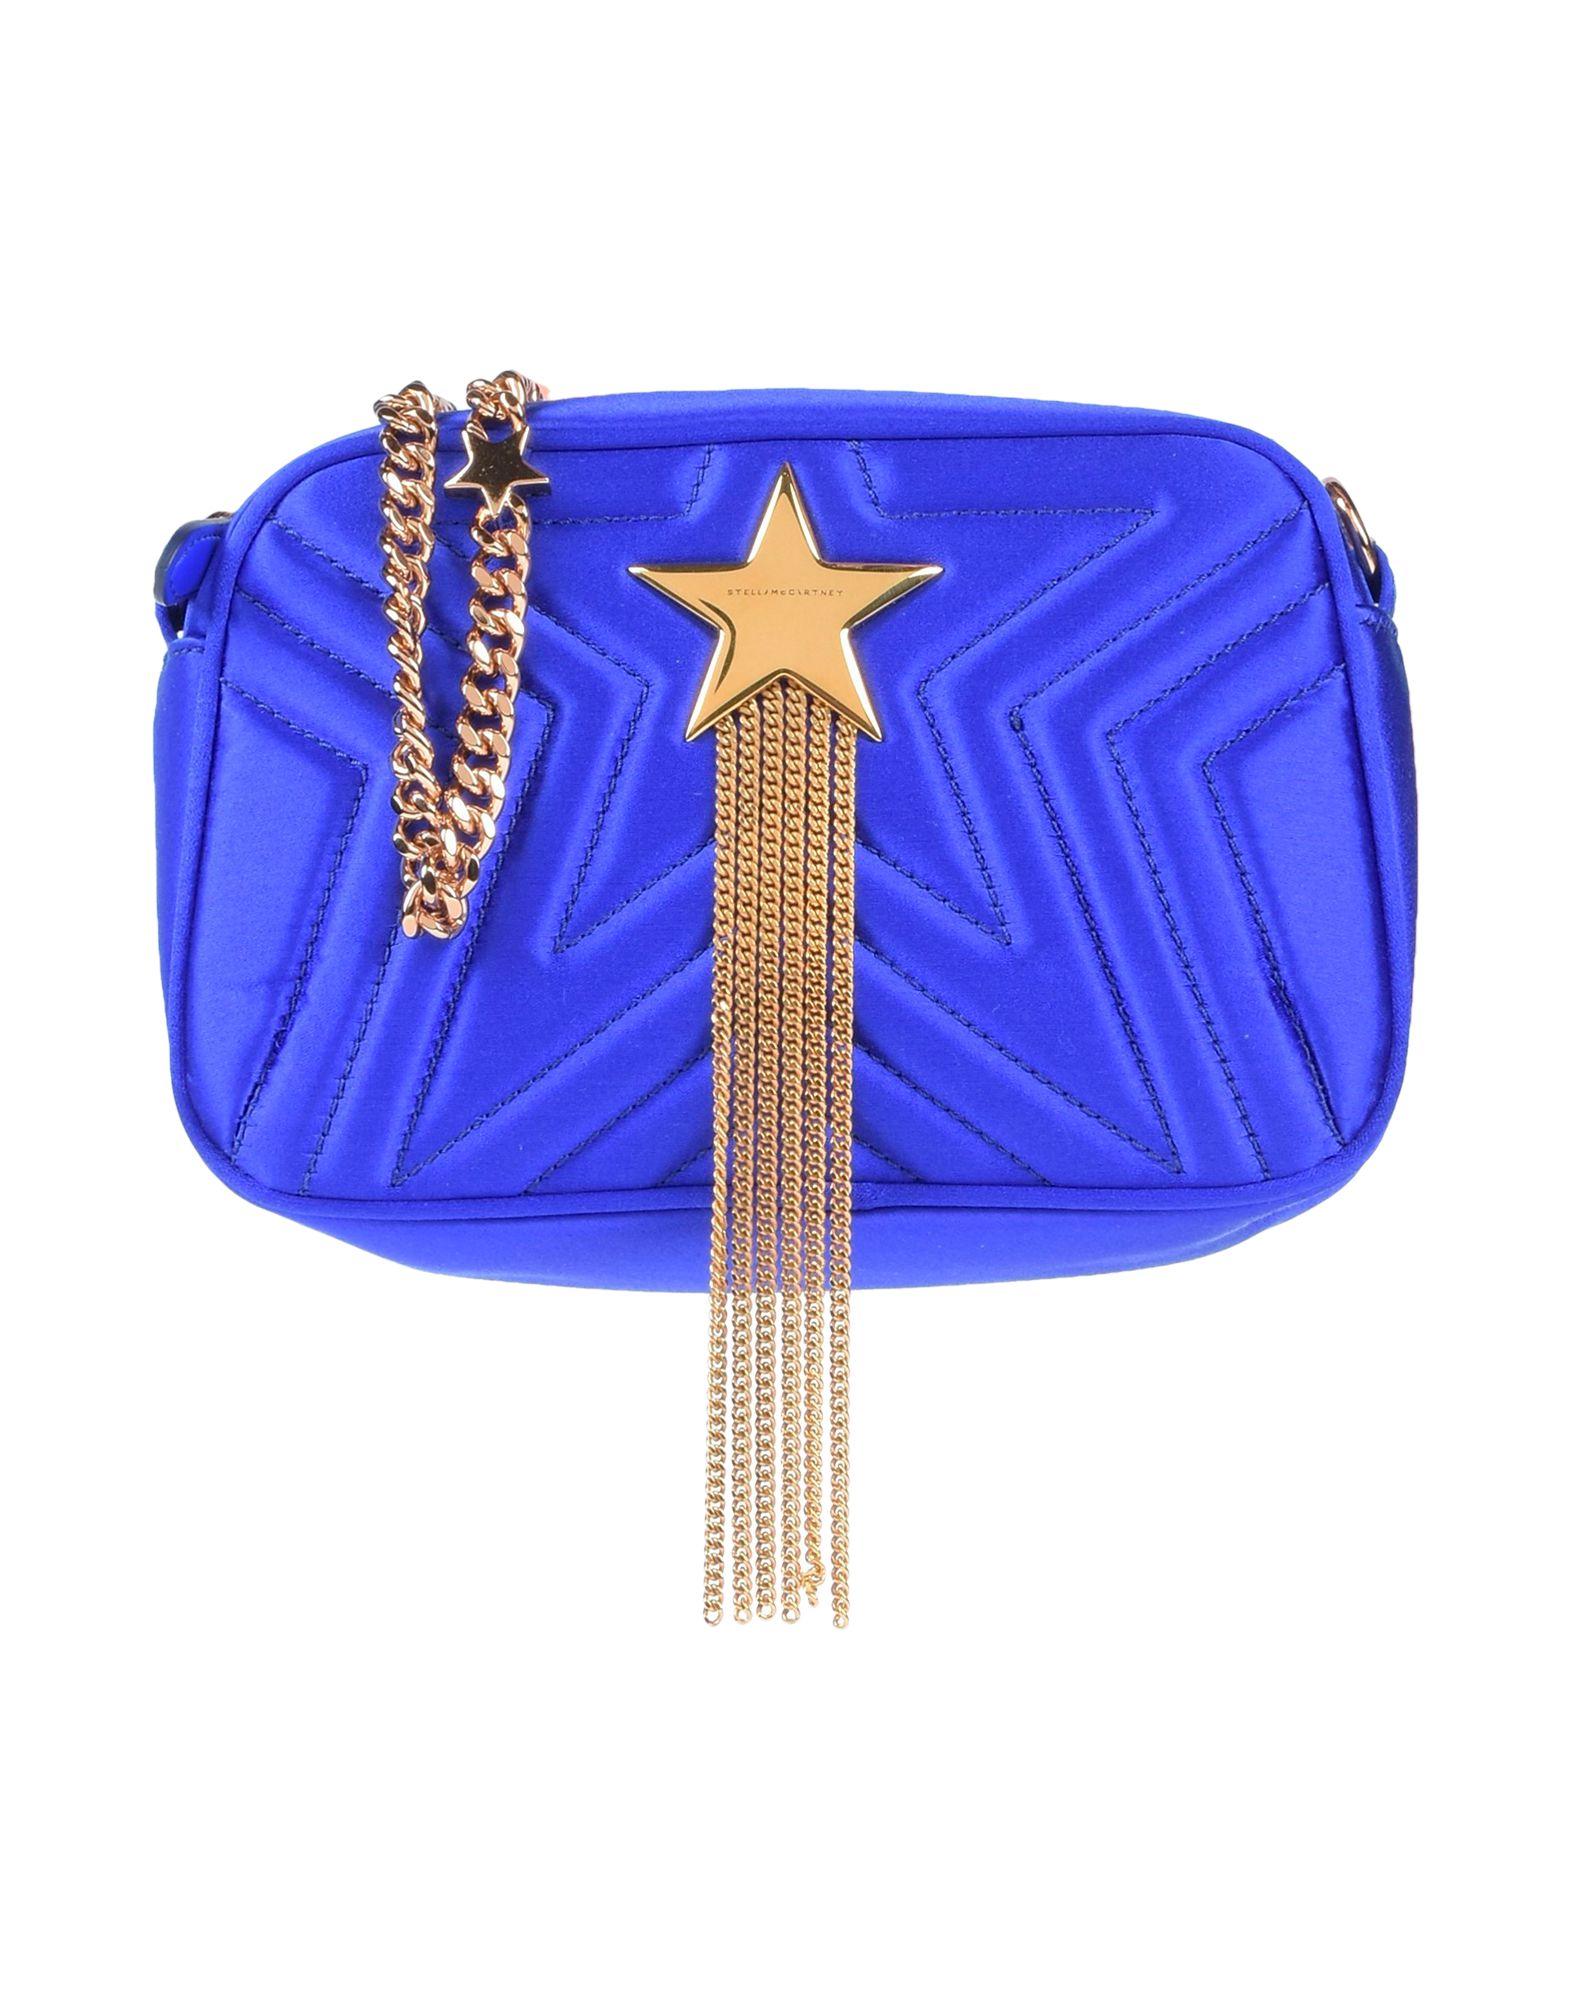 Stella Mccartney Handbags In Bright Blue